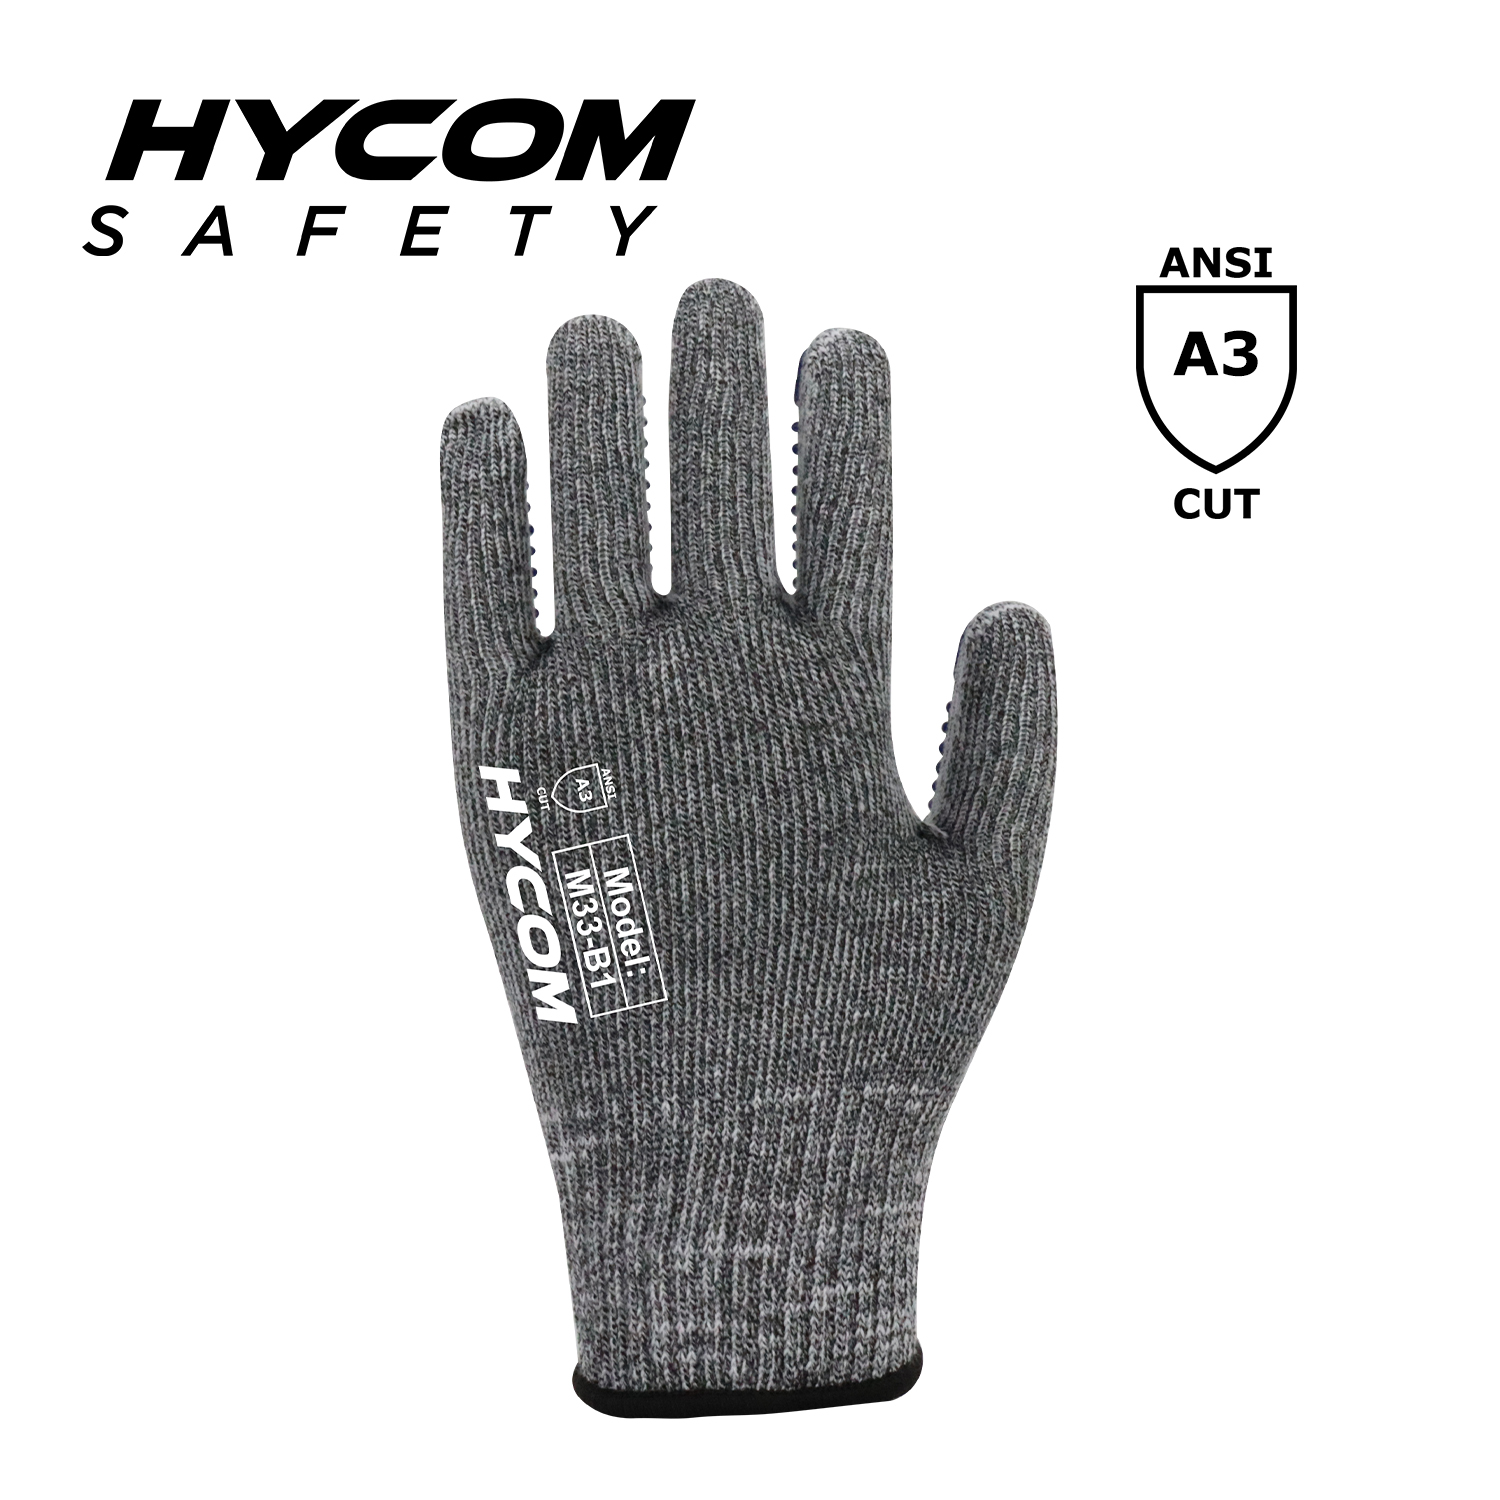 HYCOM Atemgeschnittener 10G ANSI 3 schnittfester Handschuh mit gepunkteter PVC-Beschichtung an der Handfläche